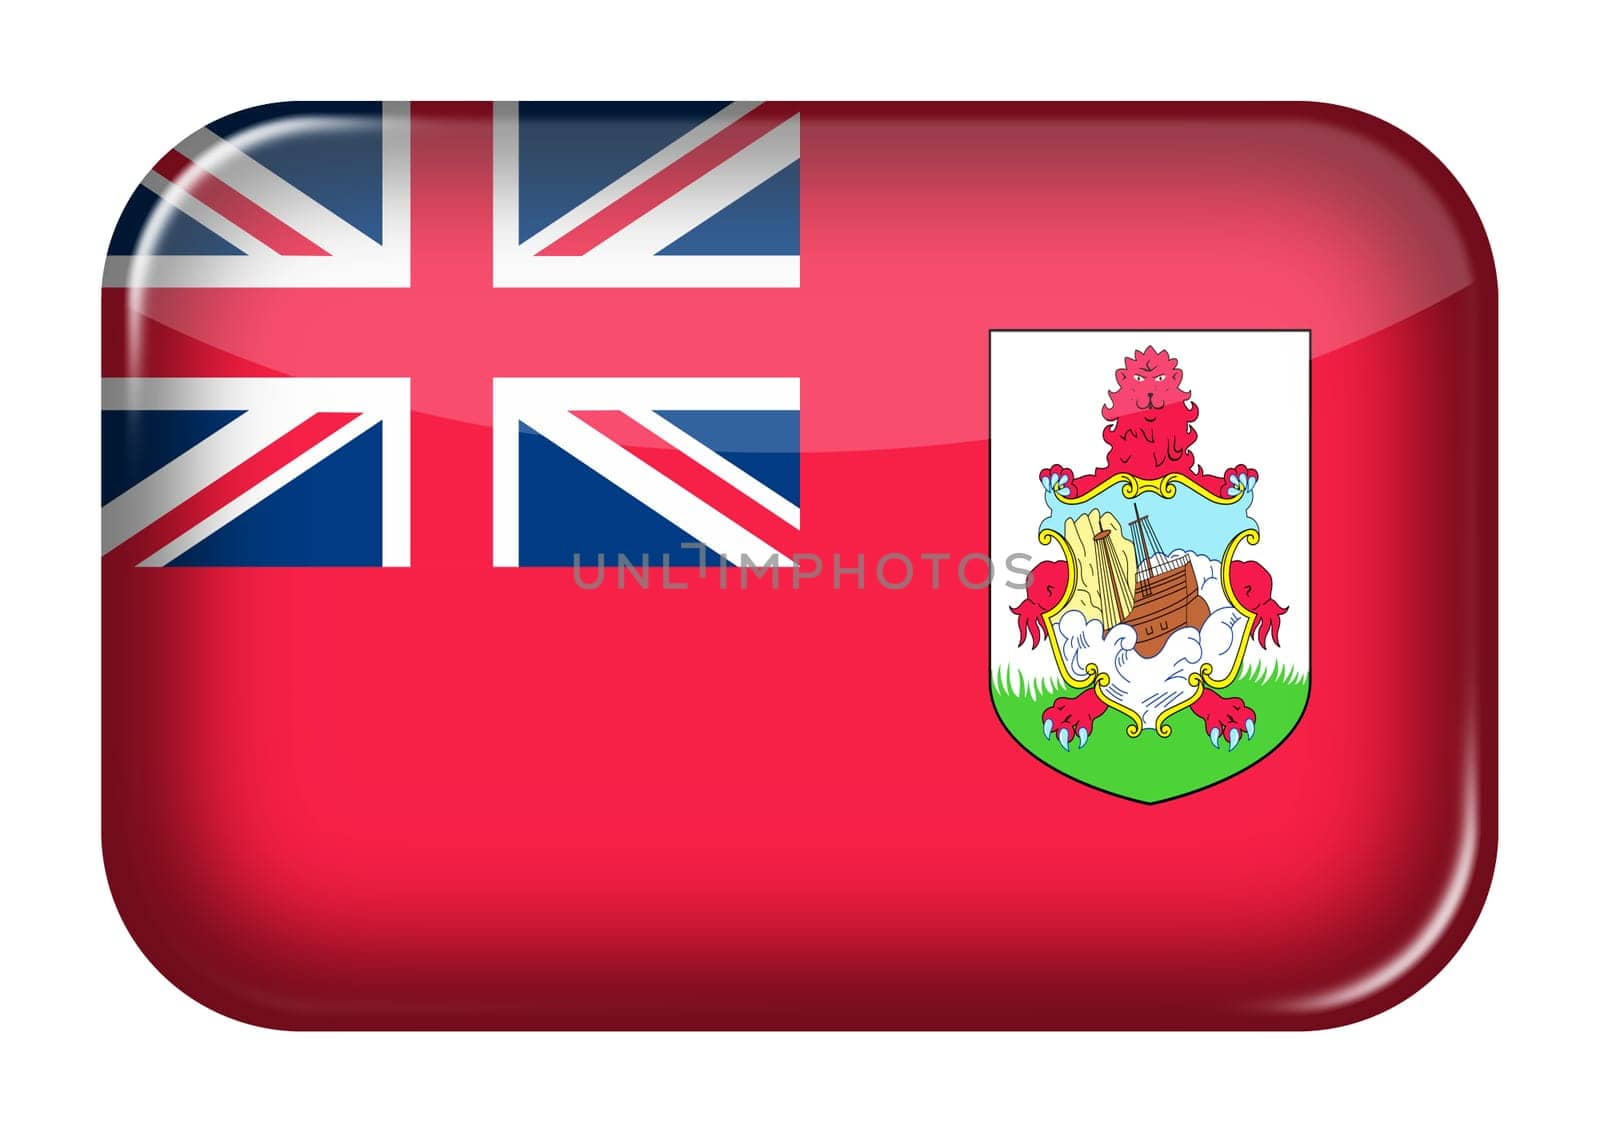 Bermuda web icon rectangle button by VivacityImages